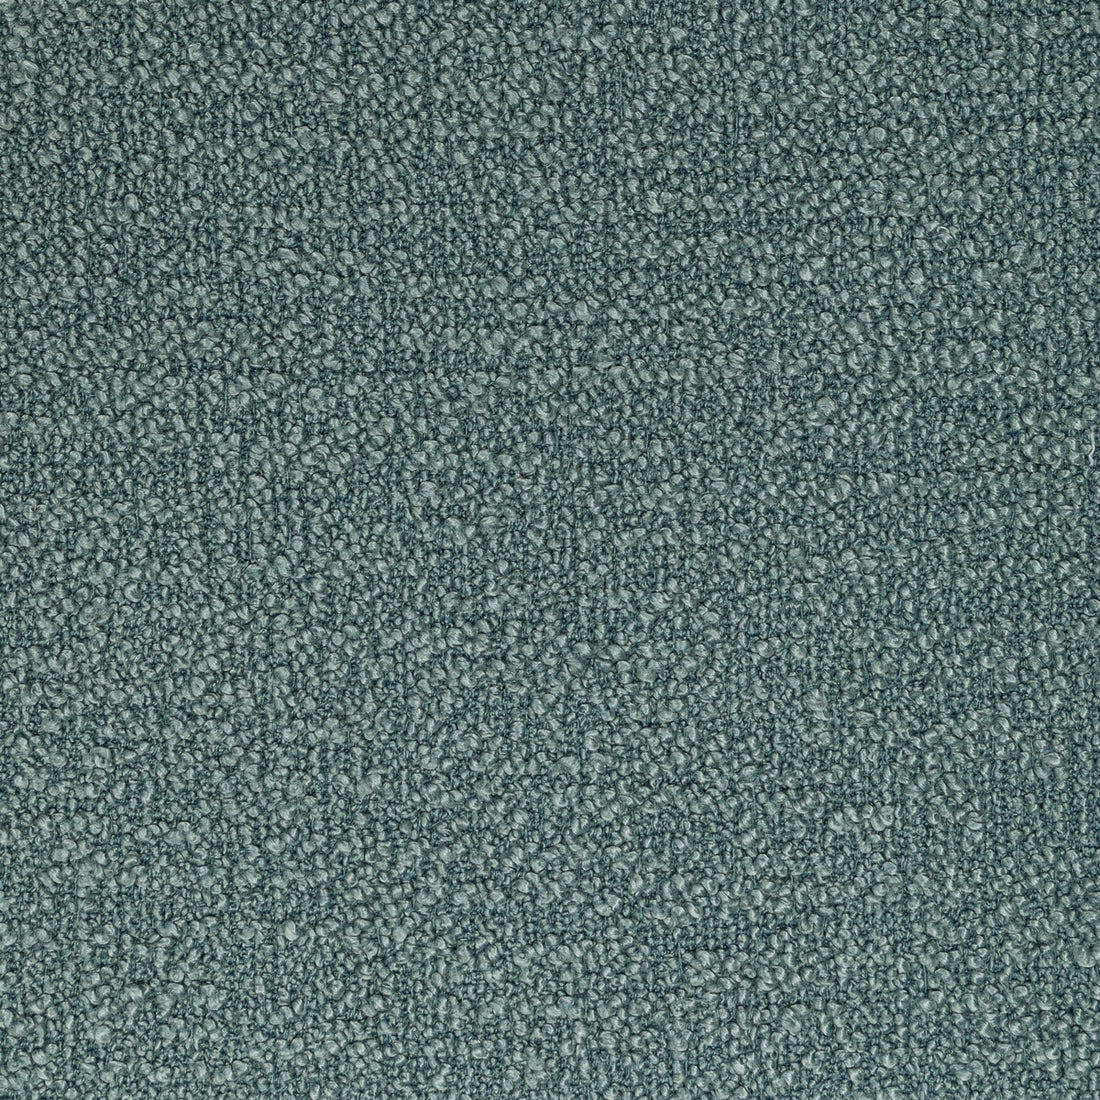 Kravet Smart fabric in 36857-511 color - pattern 36857.511.0 - by Kravet Smart in the Performance Kravetarmor collection